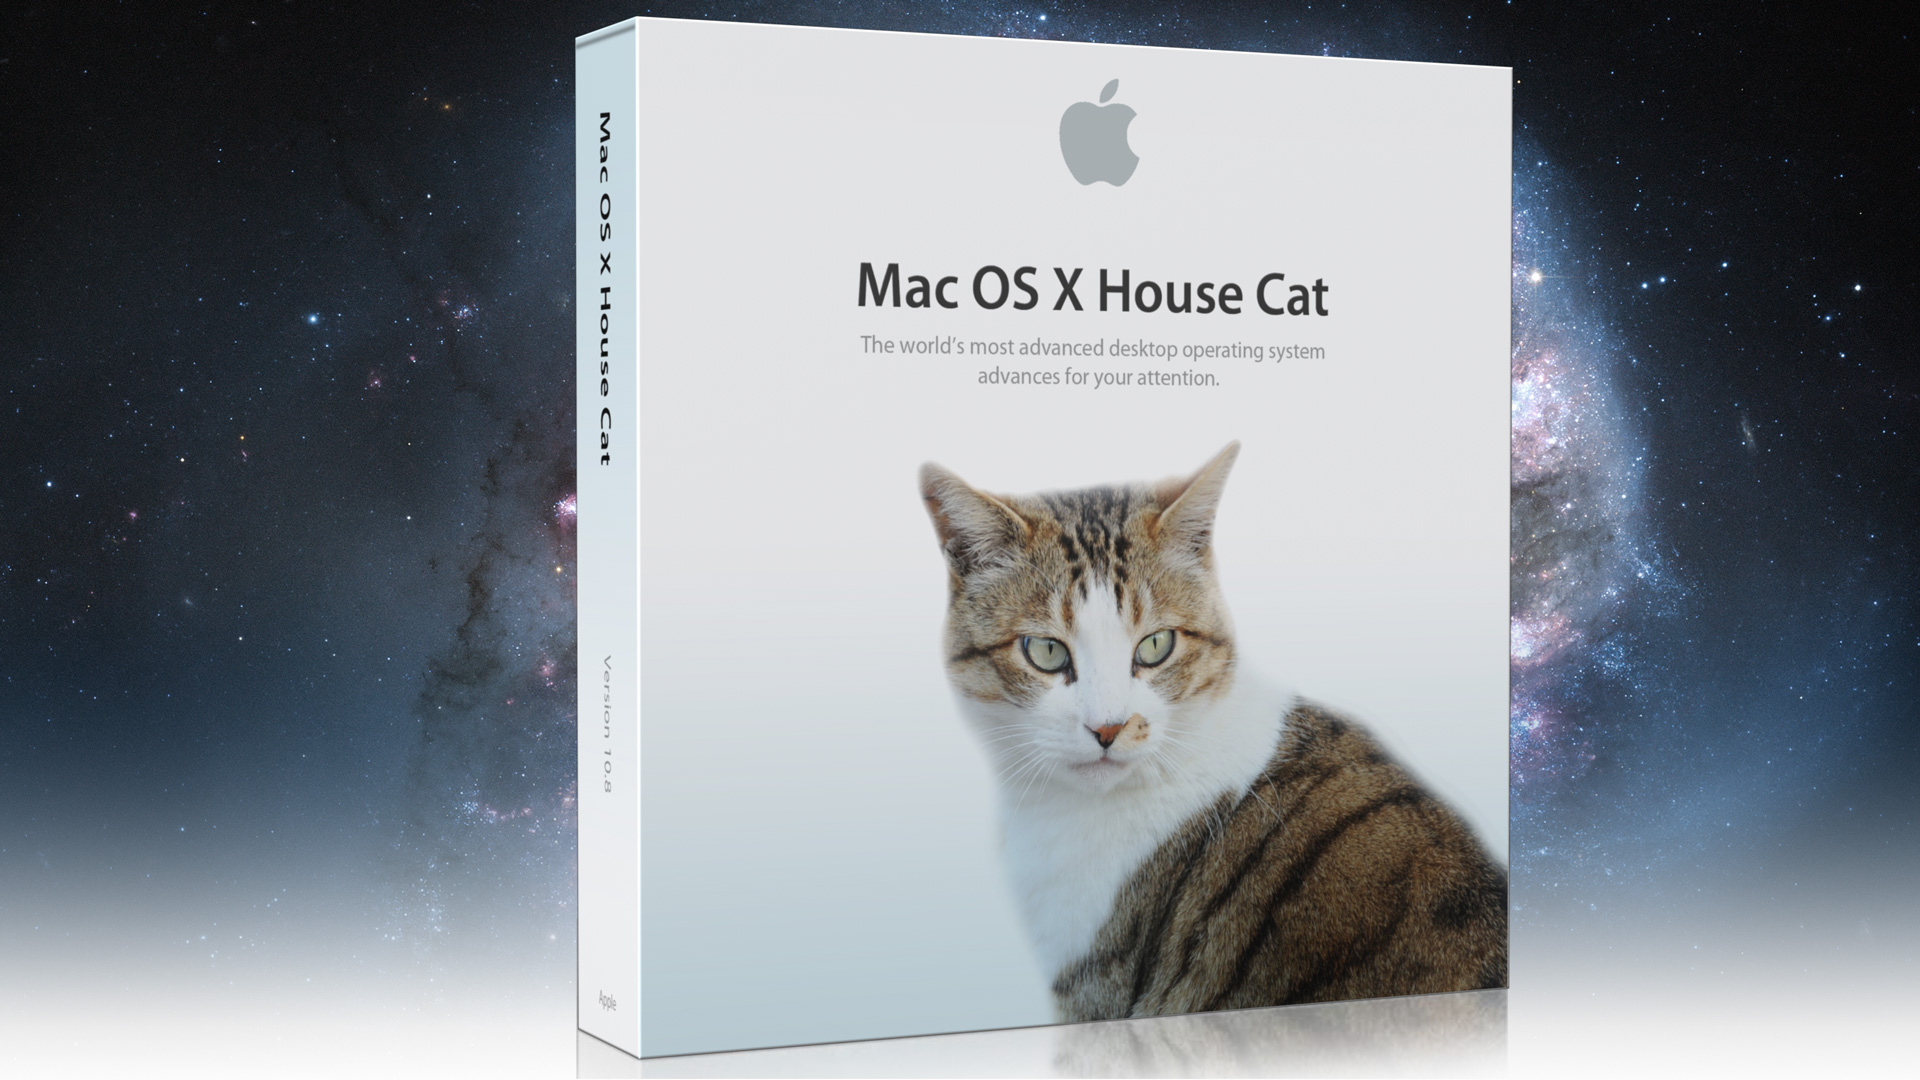 os_x_house_cat_by_drummerguy_souris-d41w9vs.jpg